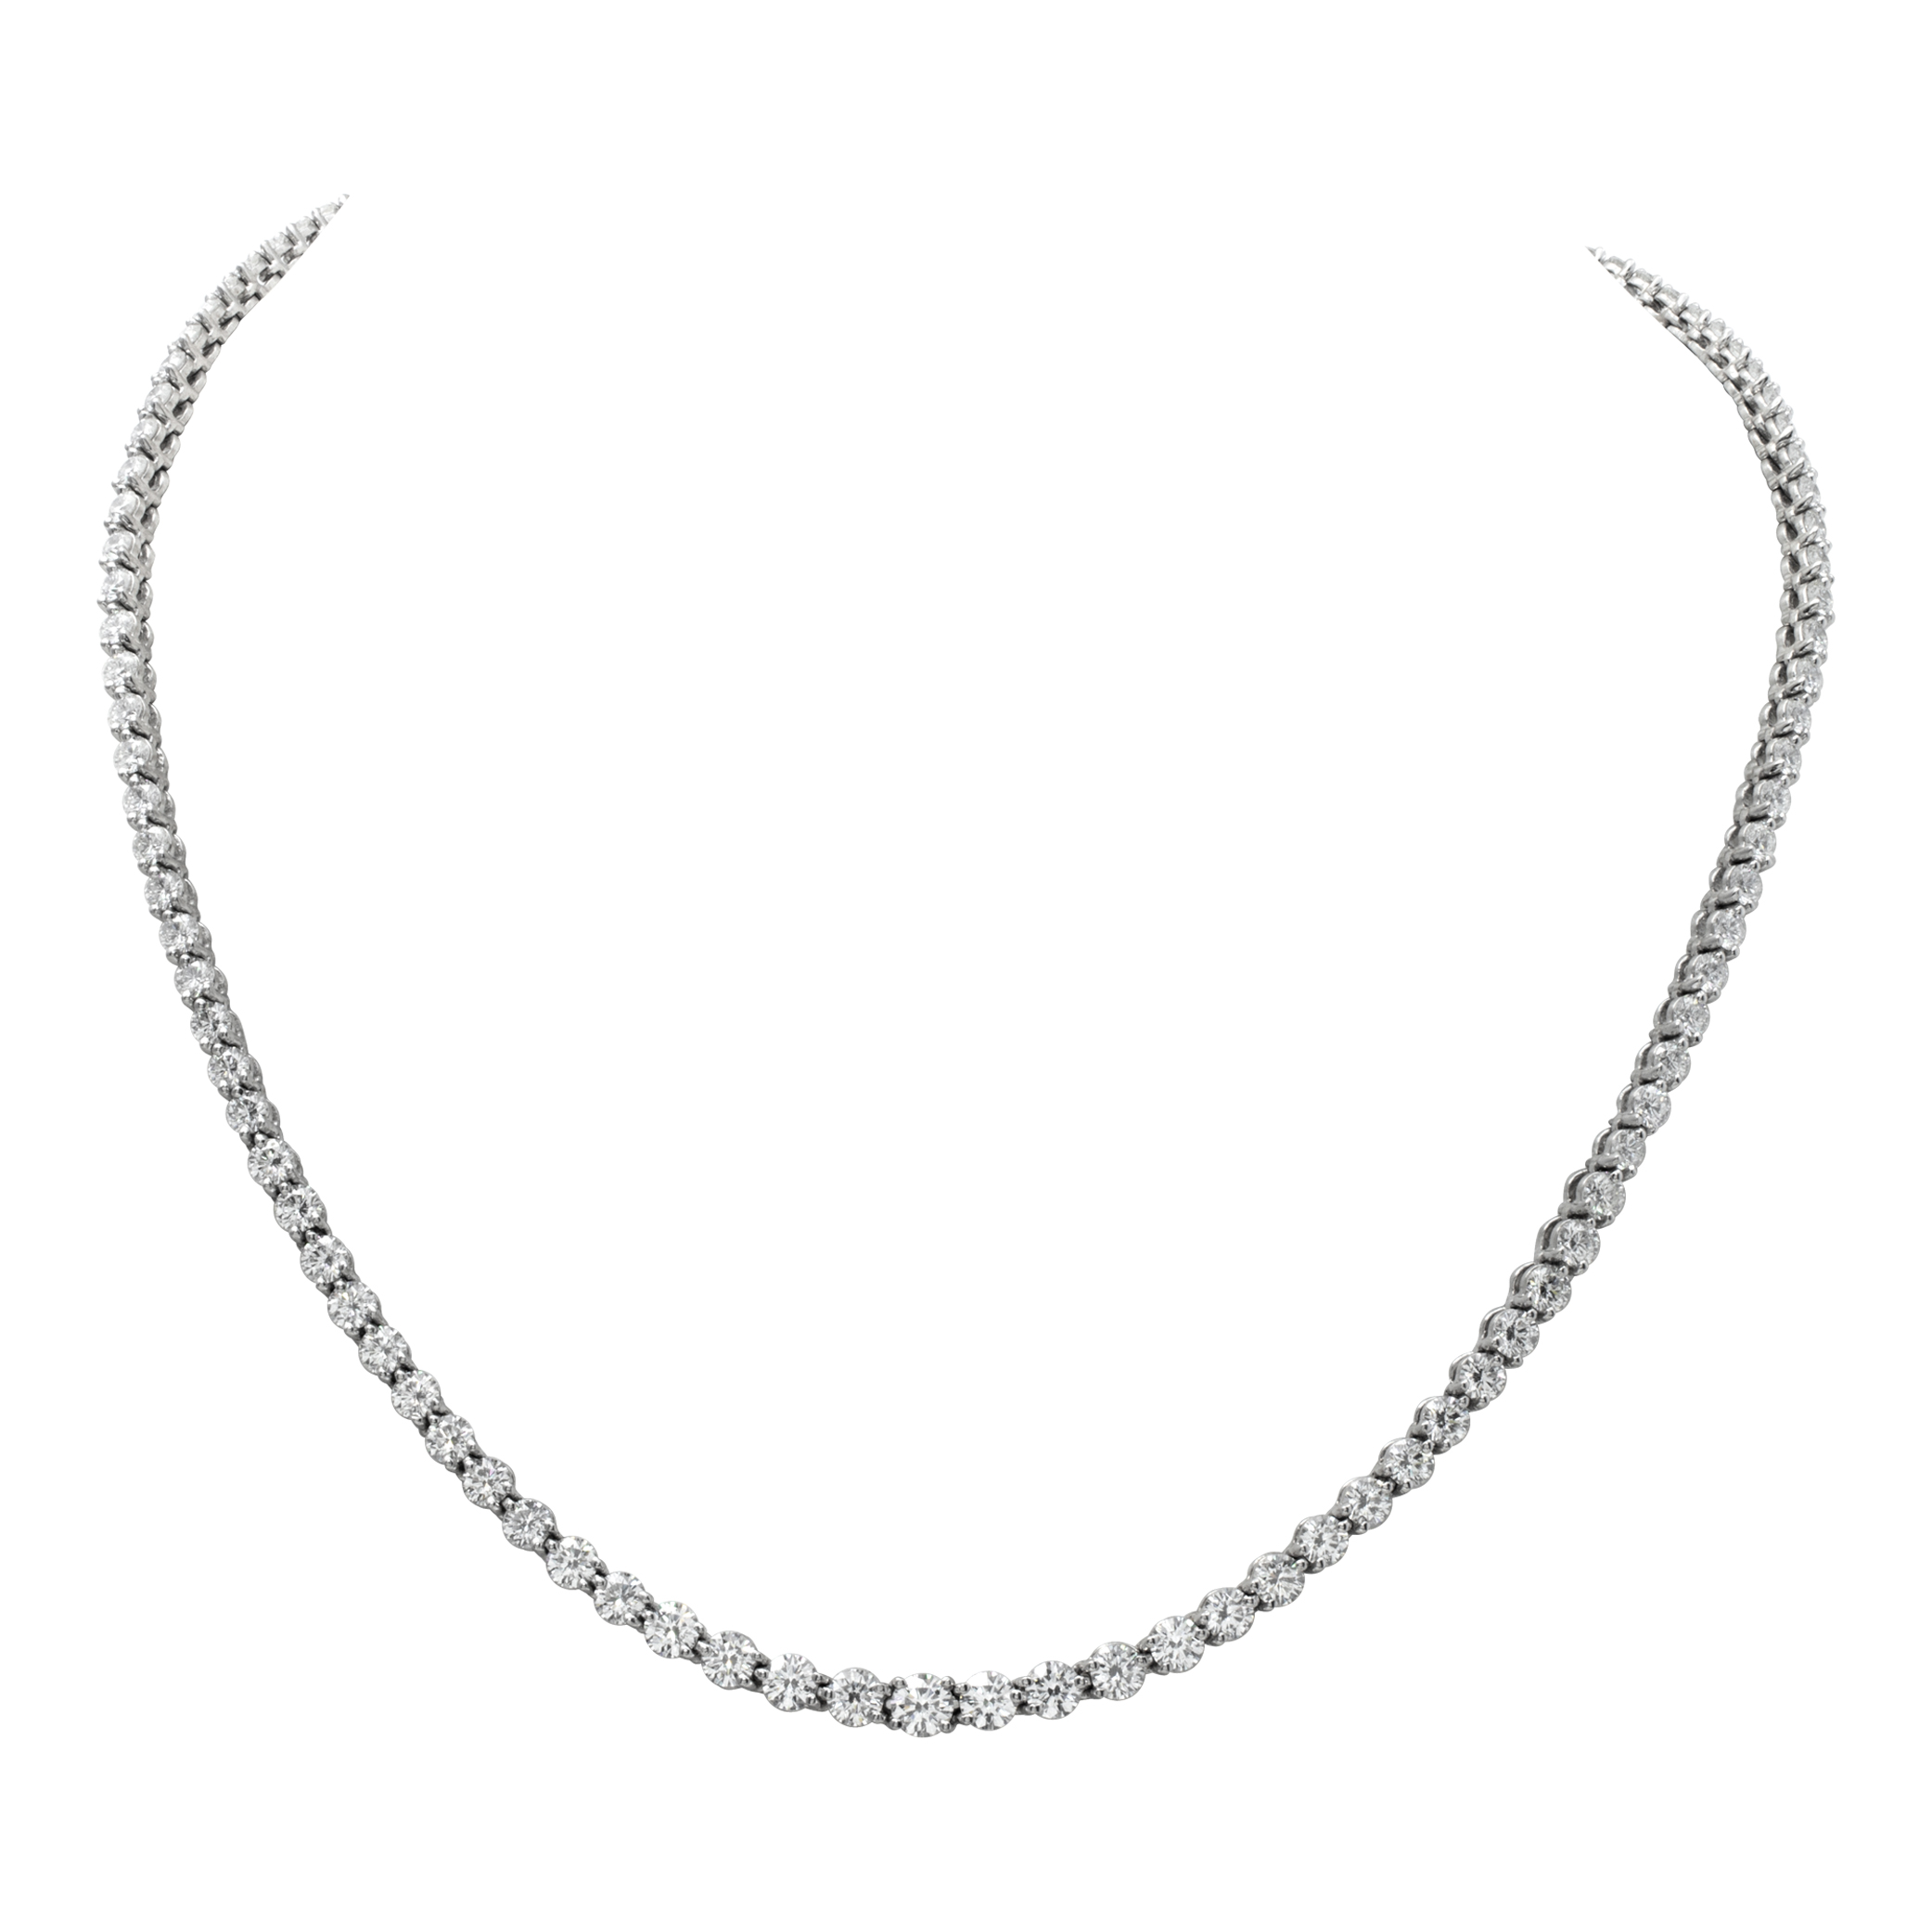 Tiffany & Co. graduated diamond necklace in platinum approx 10.18 carats G-H VVS-VS (Stones)